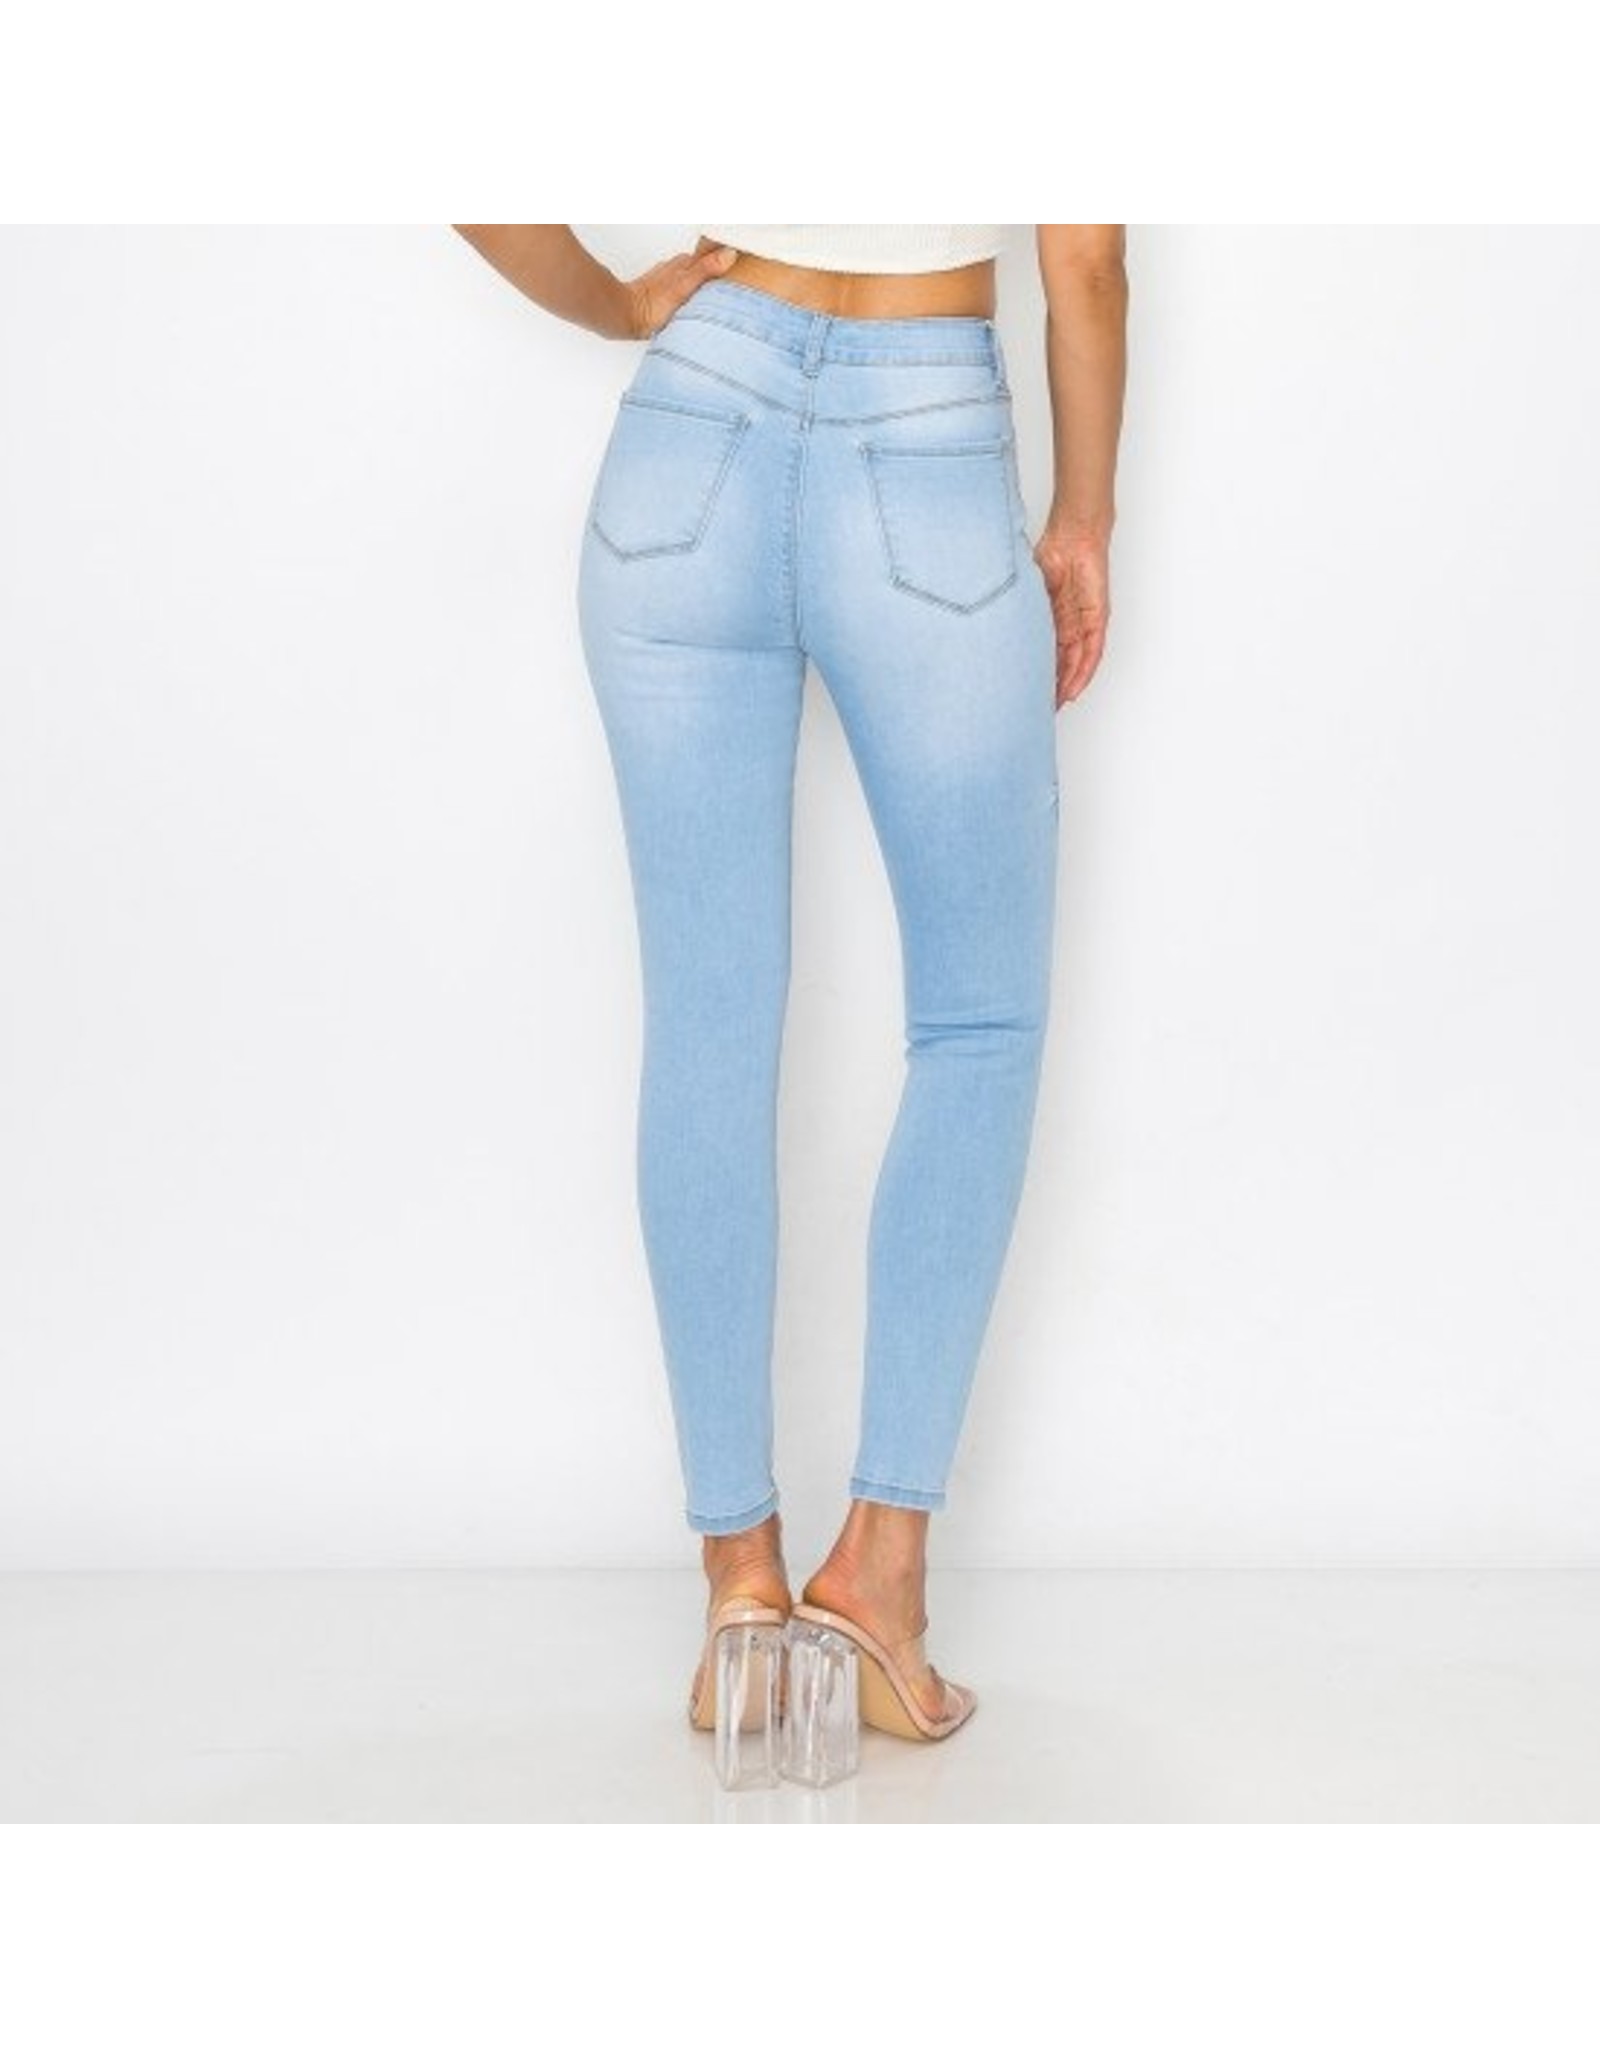 Wax Jeans - Women's Basic Five Pocket Skinny W/ Side Tacks - 90286